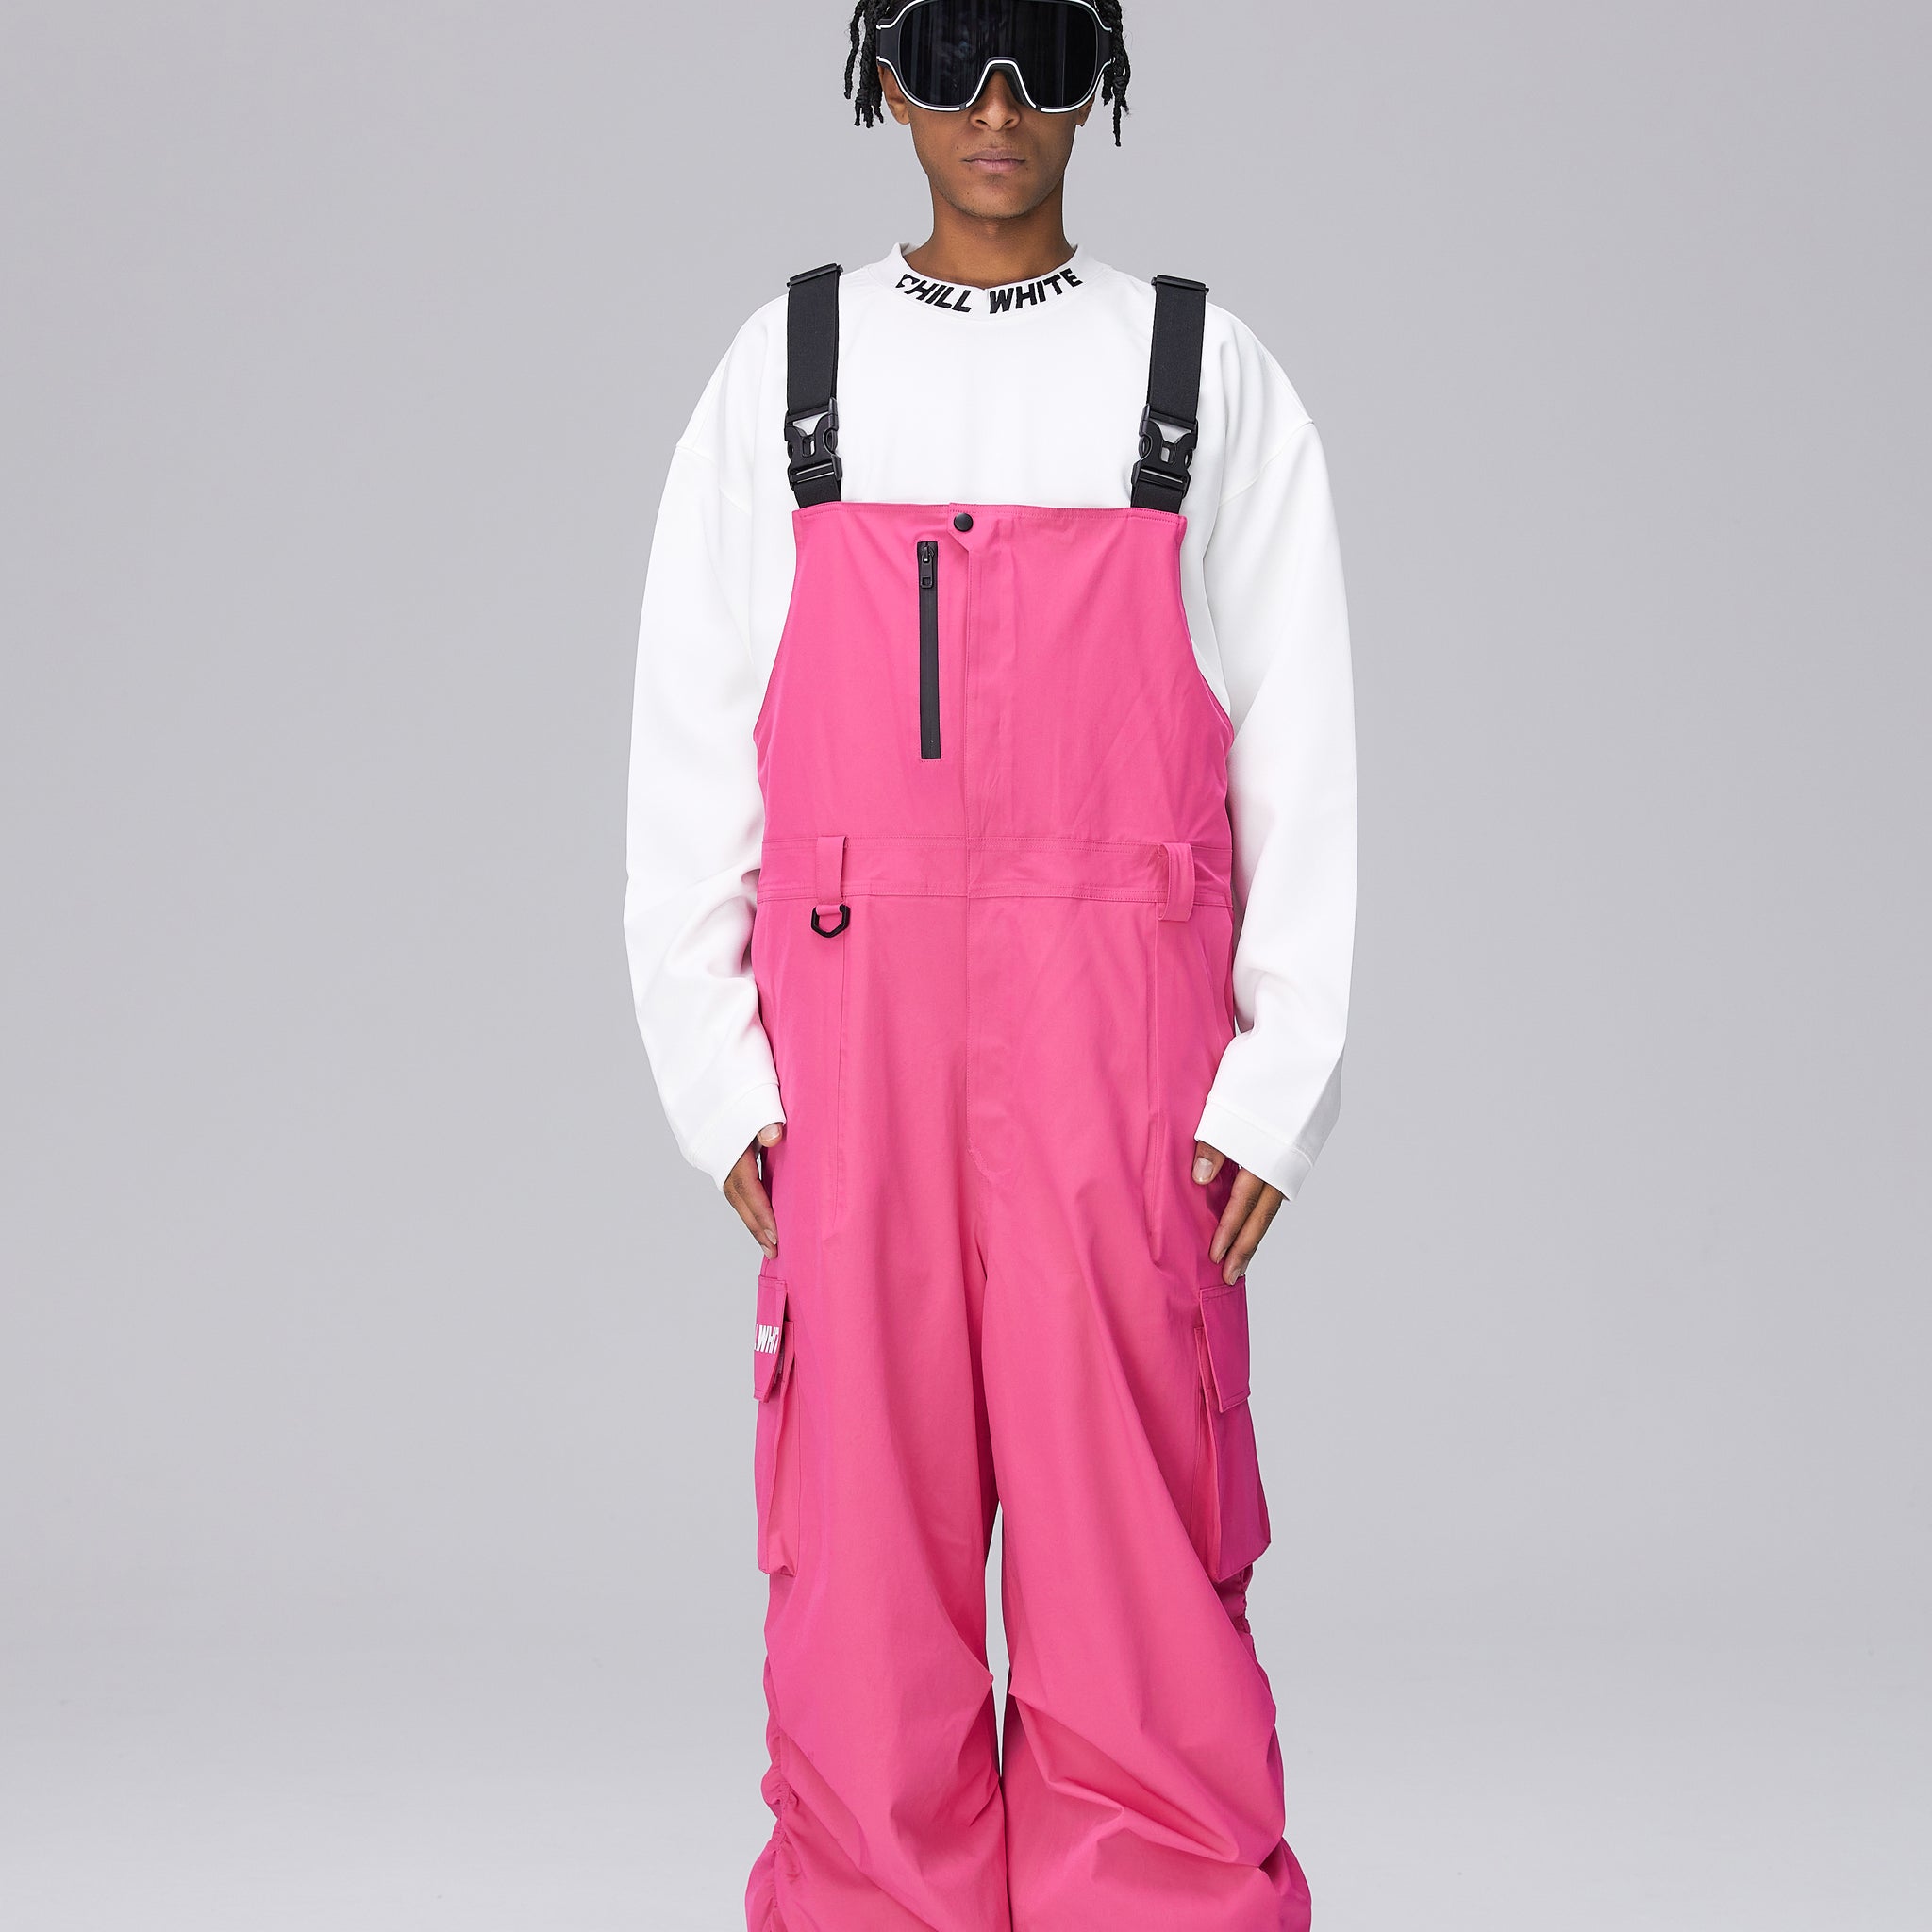 CHILLWHITE Plum Oolong Bib Pants (Two-Way Wearing) - Plum Pink